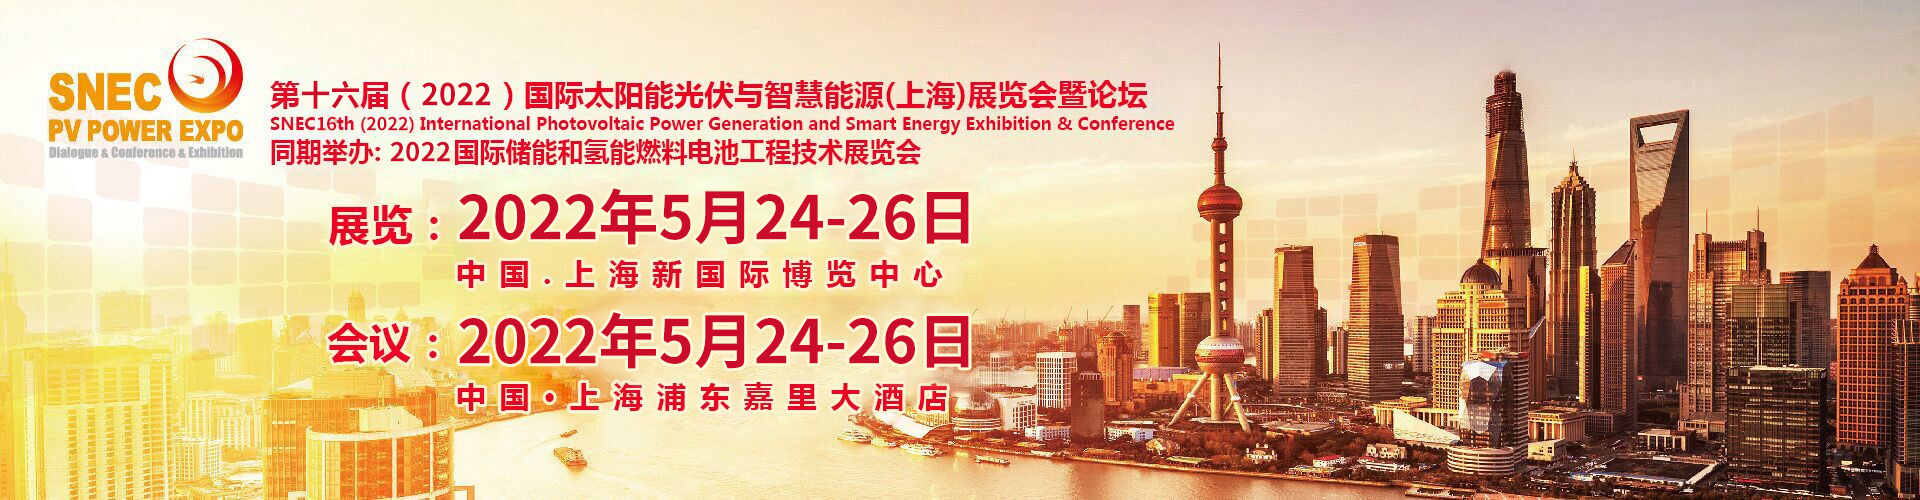 SNEC2021*15届上海光伏展正式开始预定！欢迎大家报名参加！